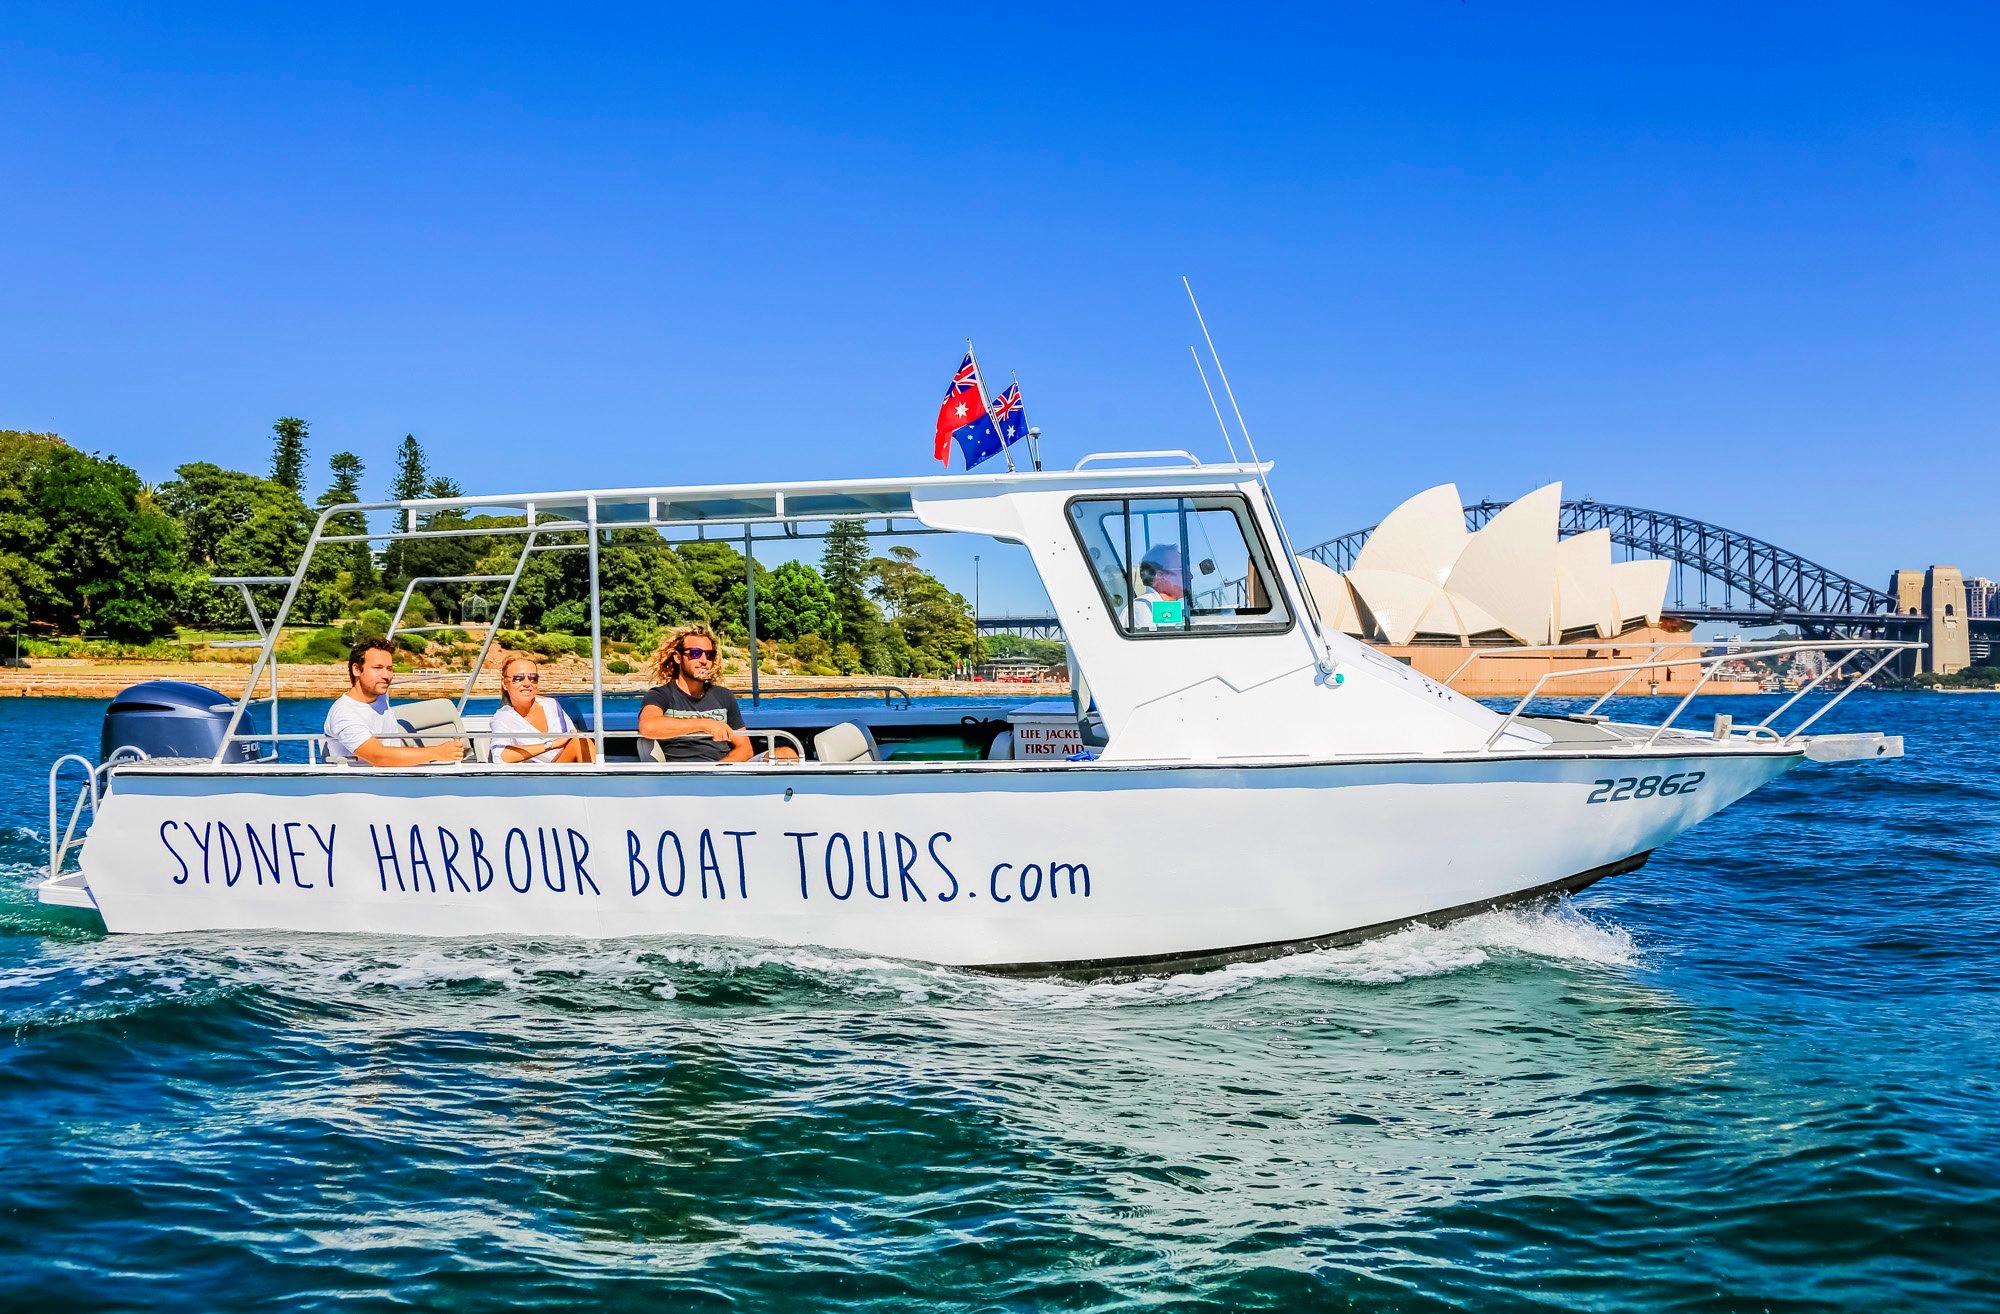 private boat tours sydney harbour